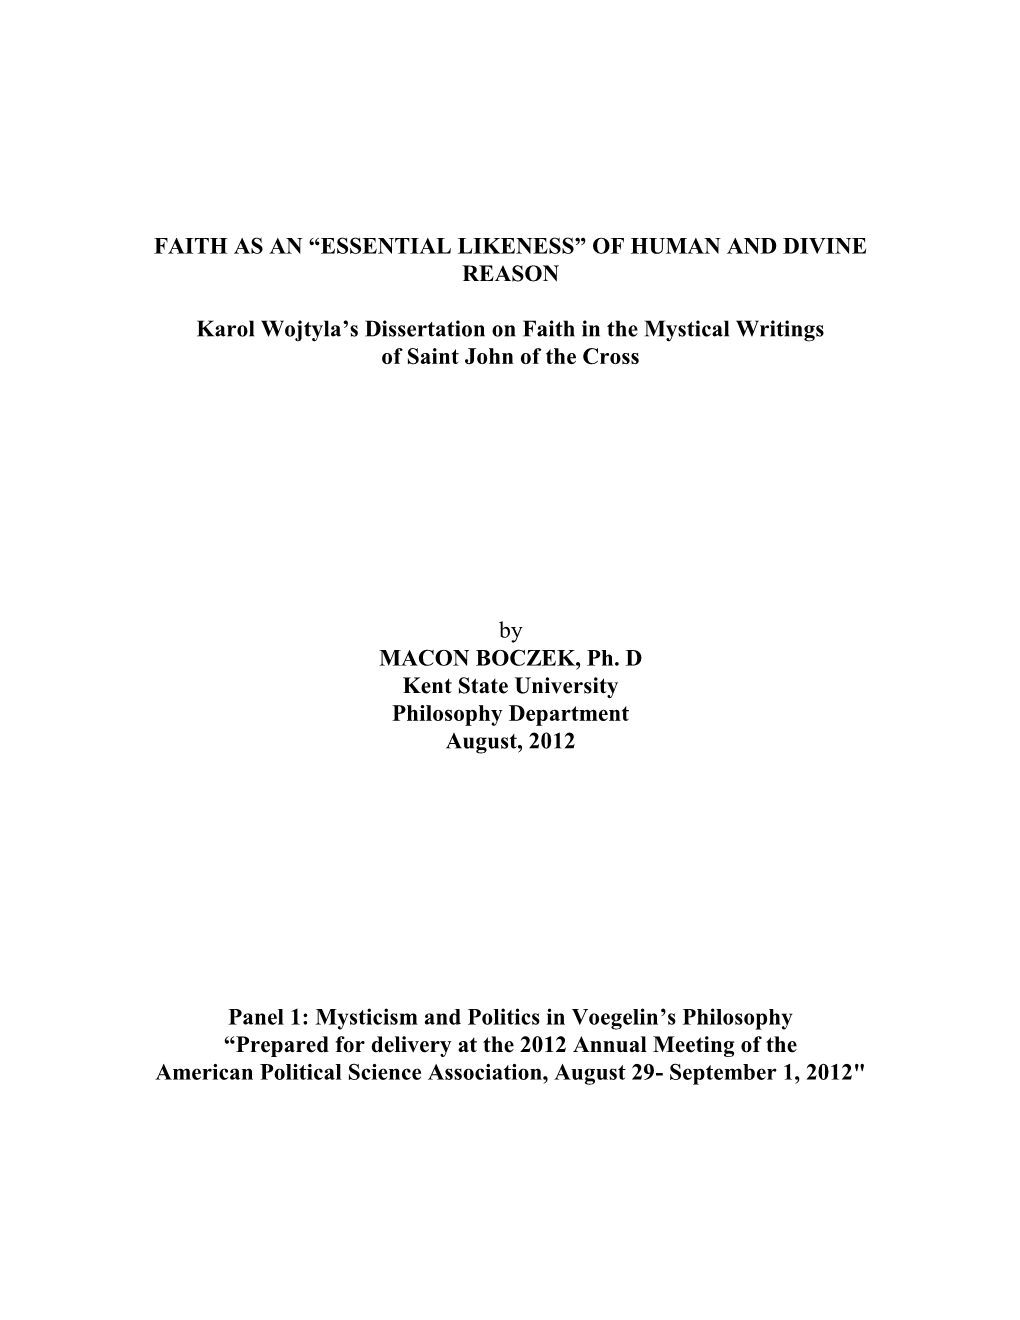 Of the Human and Divine Reason: Karol Wojtyla's Dissertation on Faith